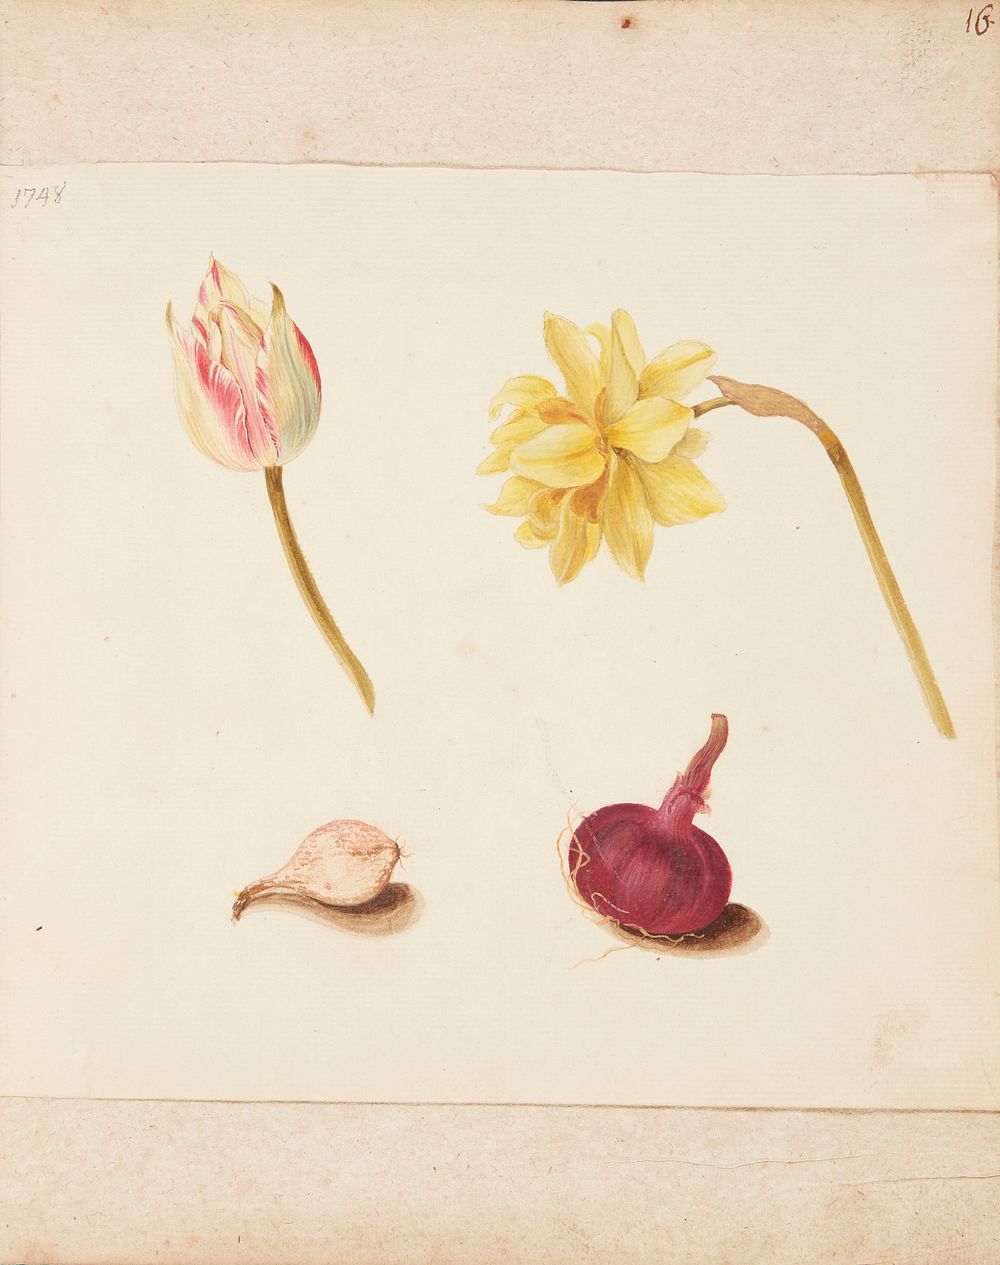 Study of flowers and bulbs by Johanna Fosie